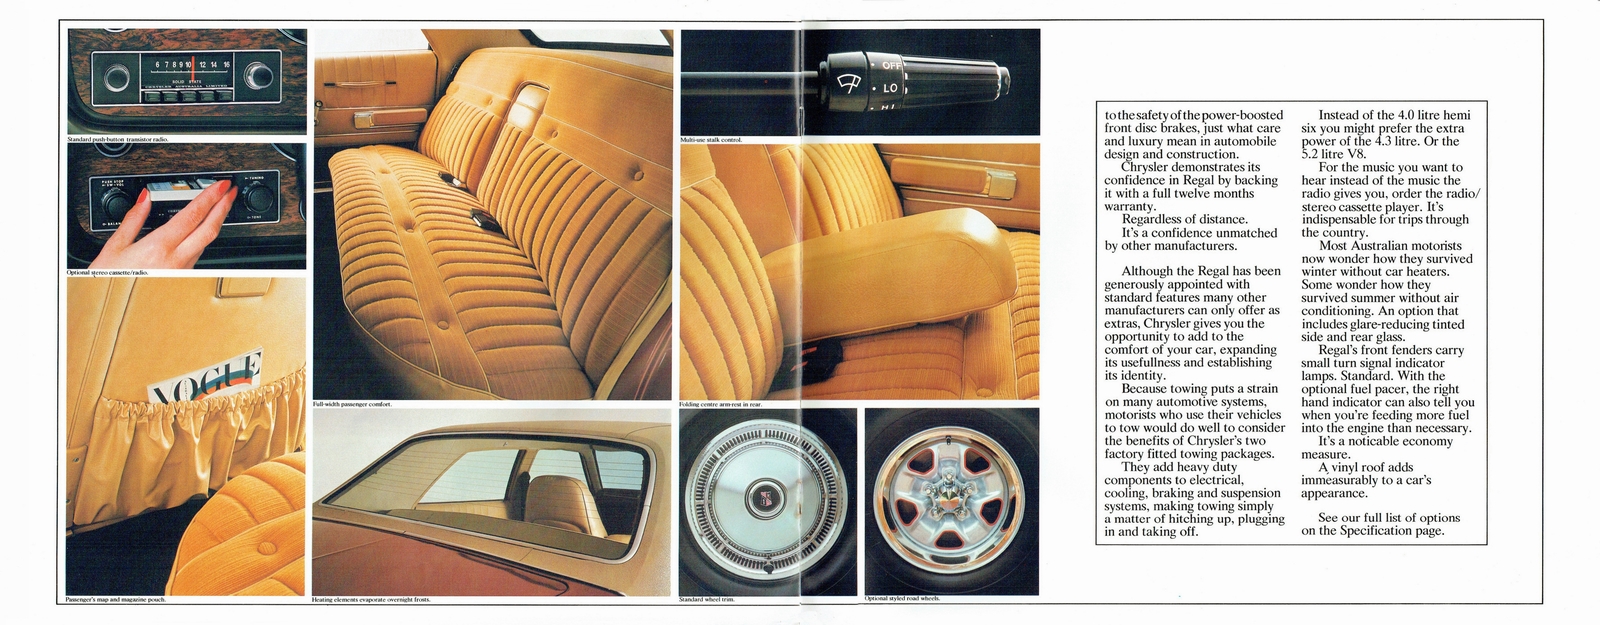 n_1976 Chrysler CL Regal-06-07.jpg